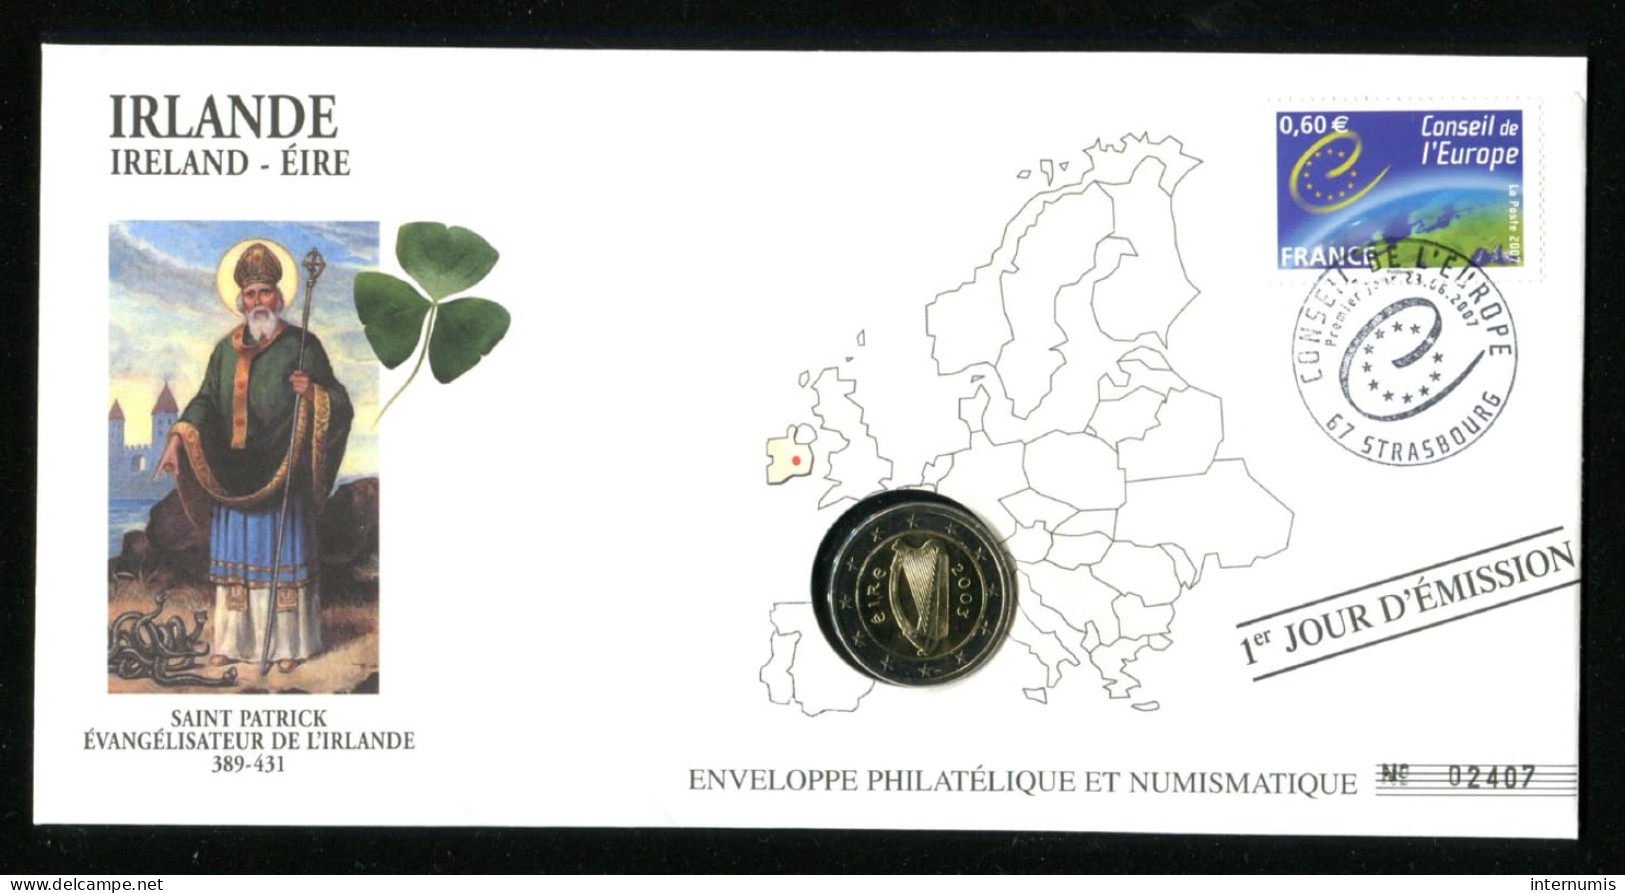 Irlande / Ireland, 2 Euro, 2003, 1er Jour D'Emission (23-06-2007) - Enveloppe Philatélique Et Numismatique - Irland